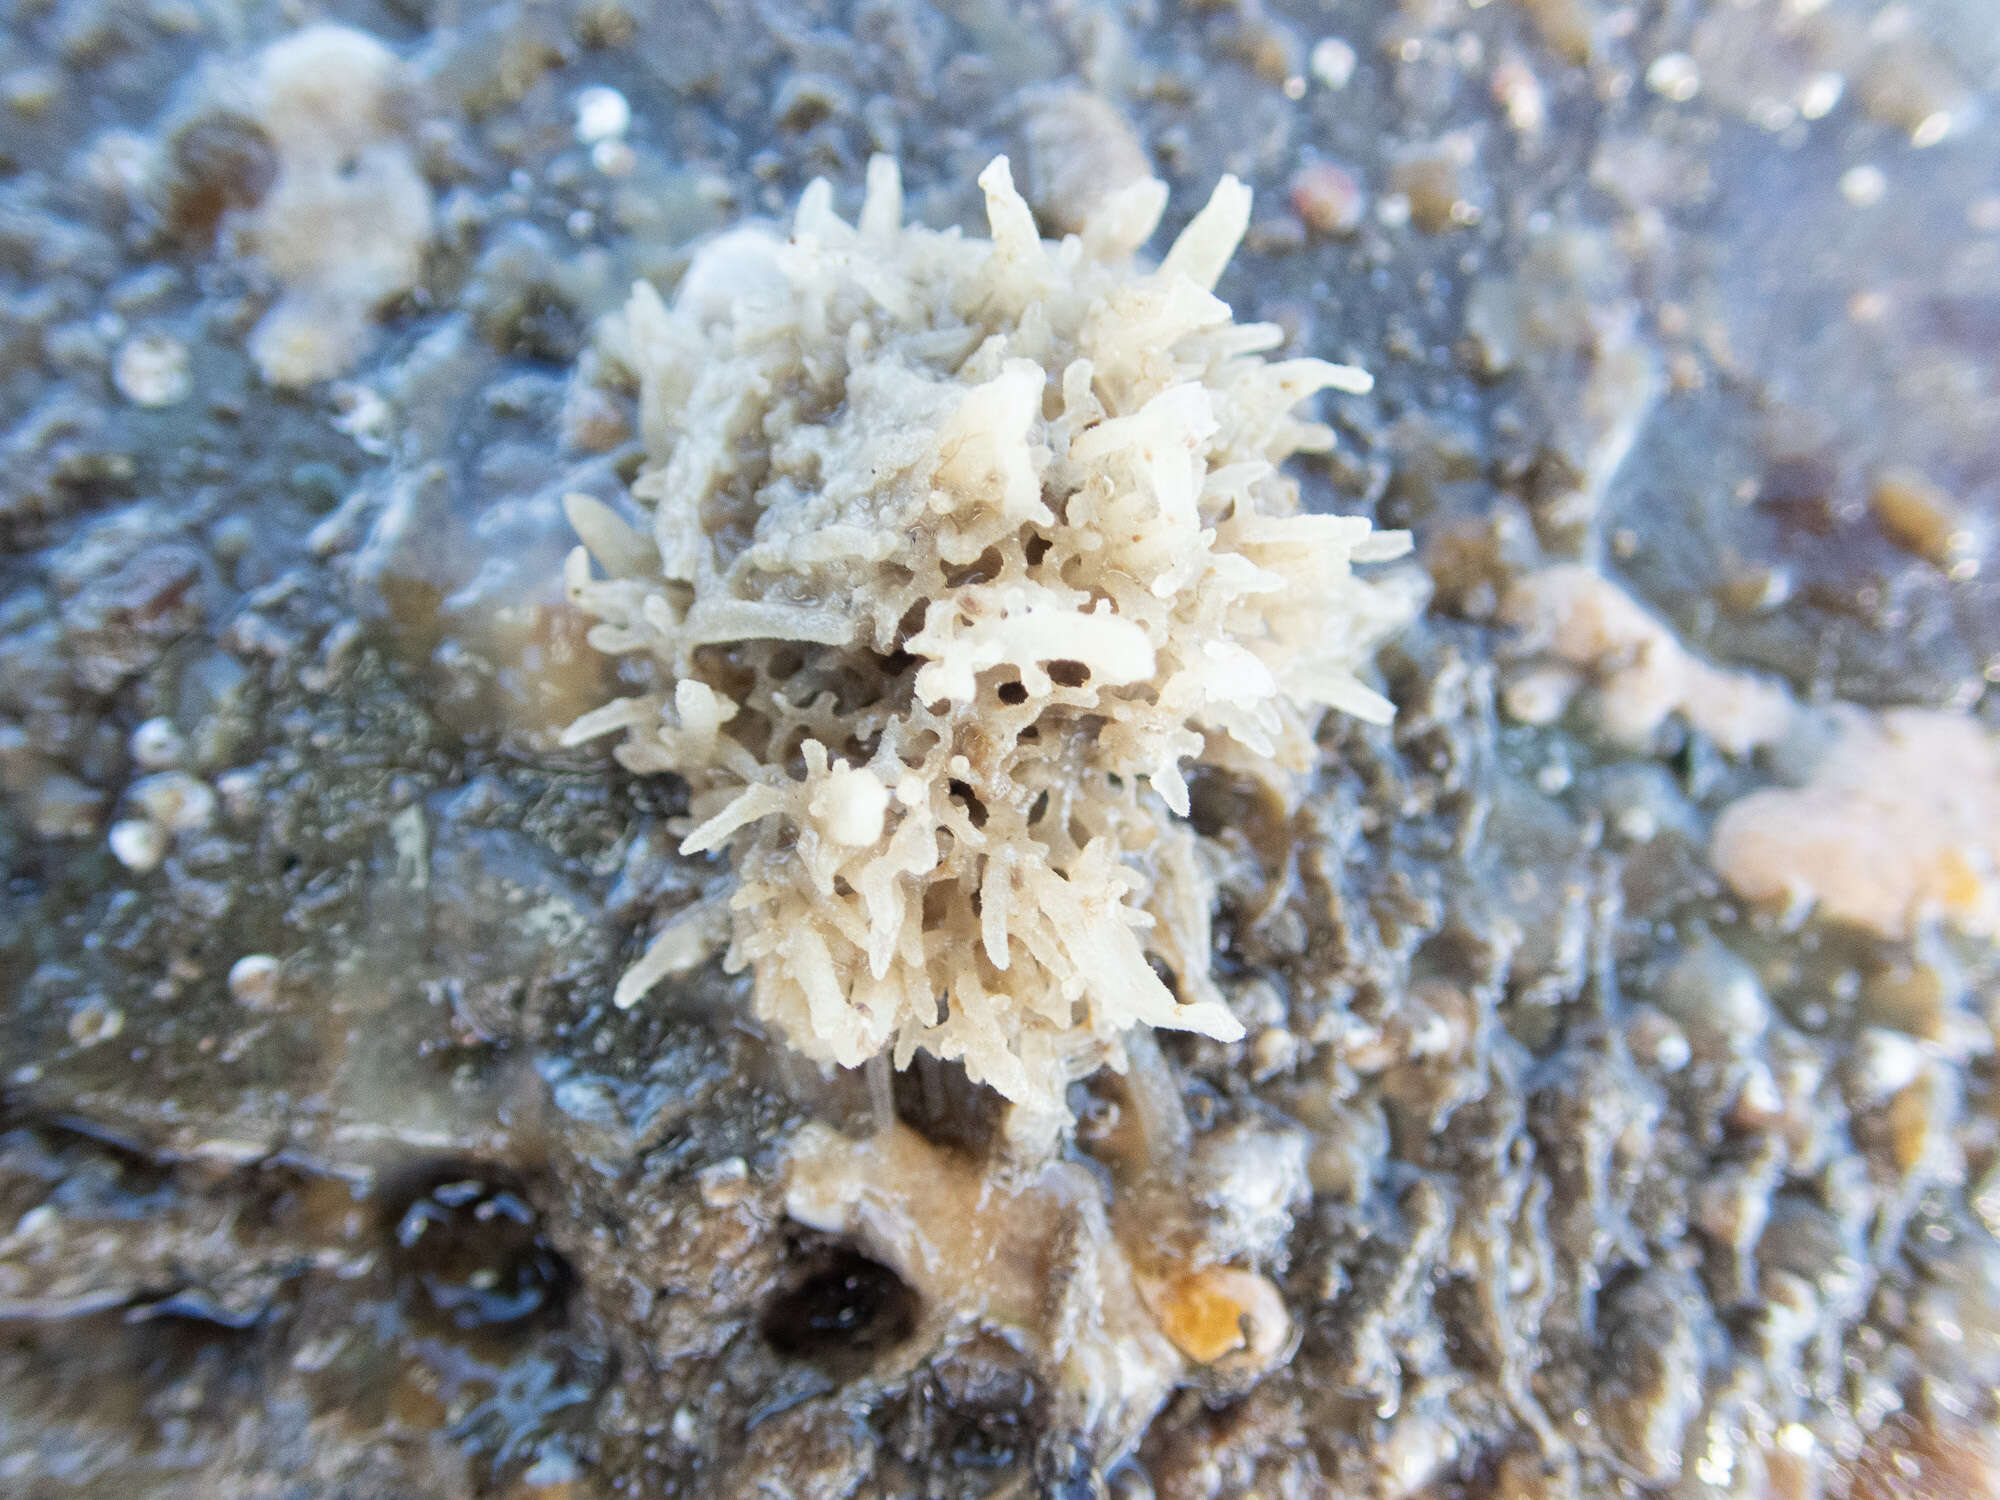 Image of orange pipe calcareous sponge